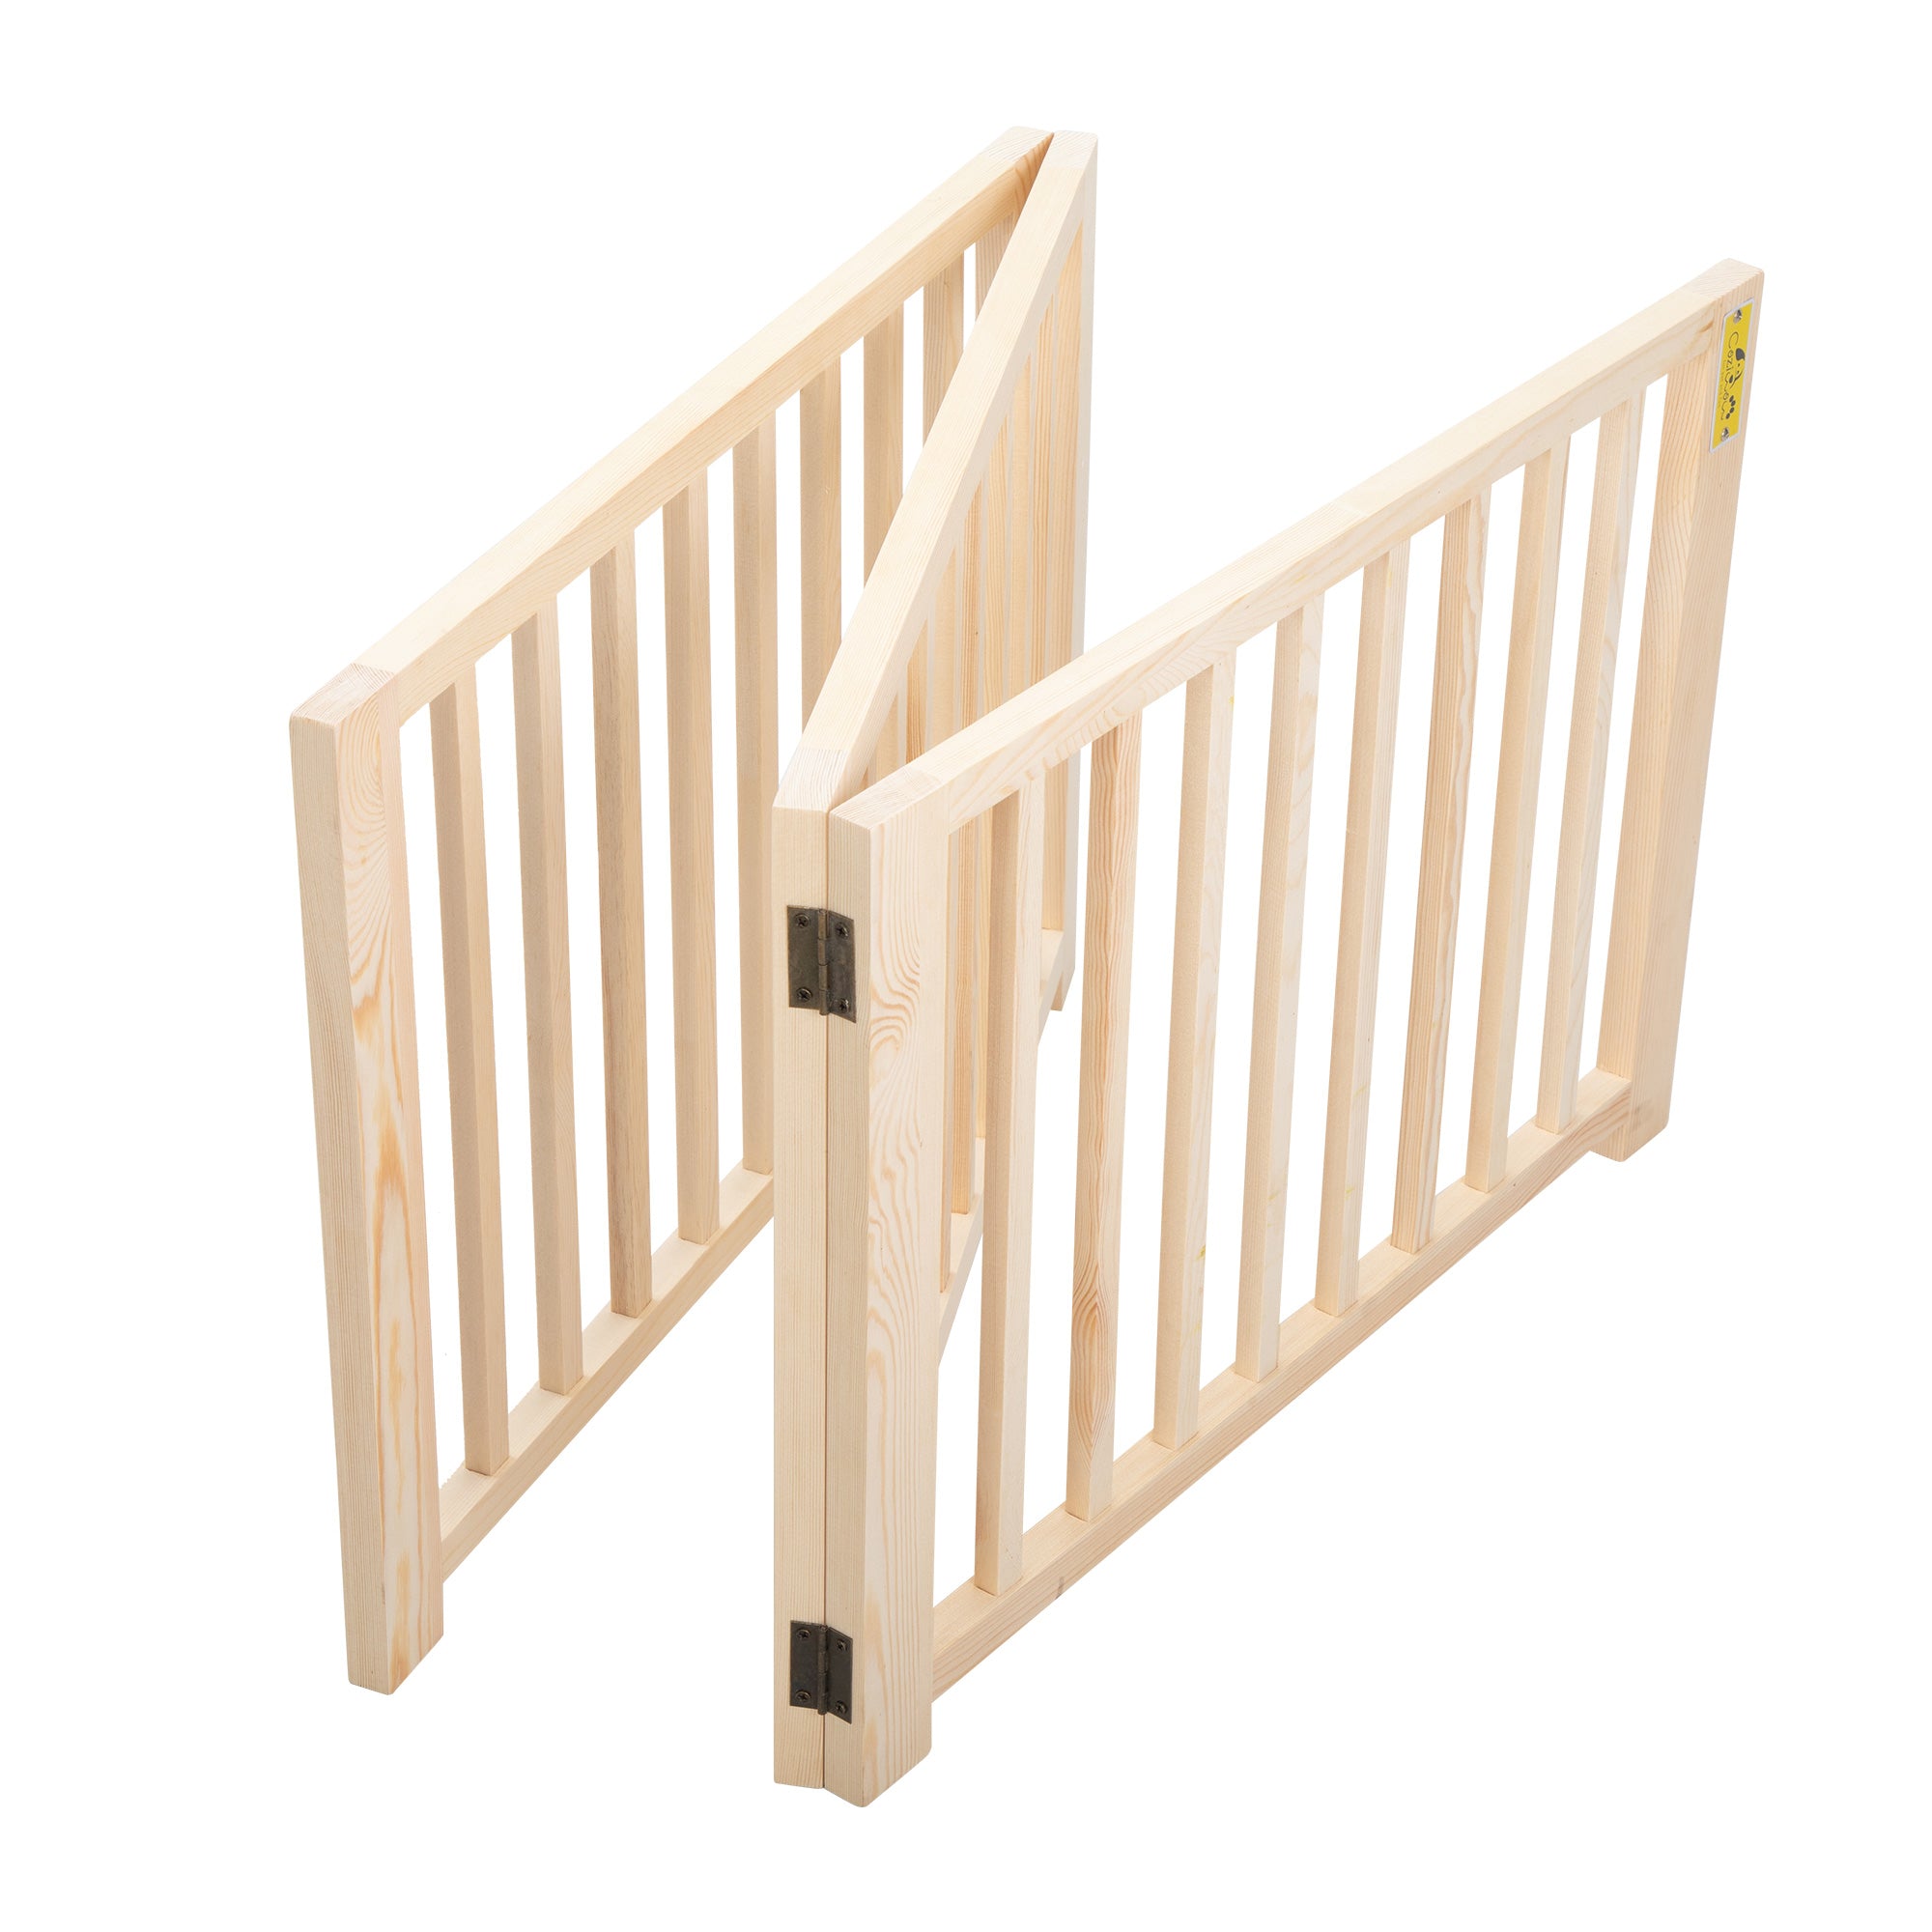 Coziwow 3 Panel Freestanding Dog Gate Wooden Foldable Pet Fence， 17.5